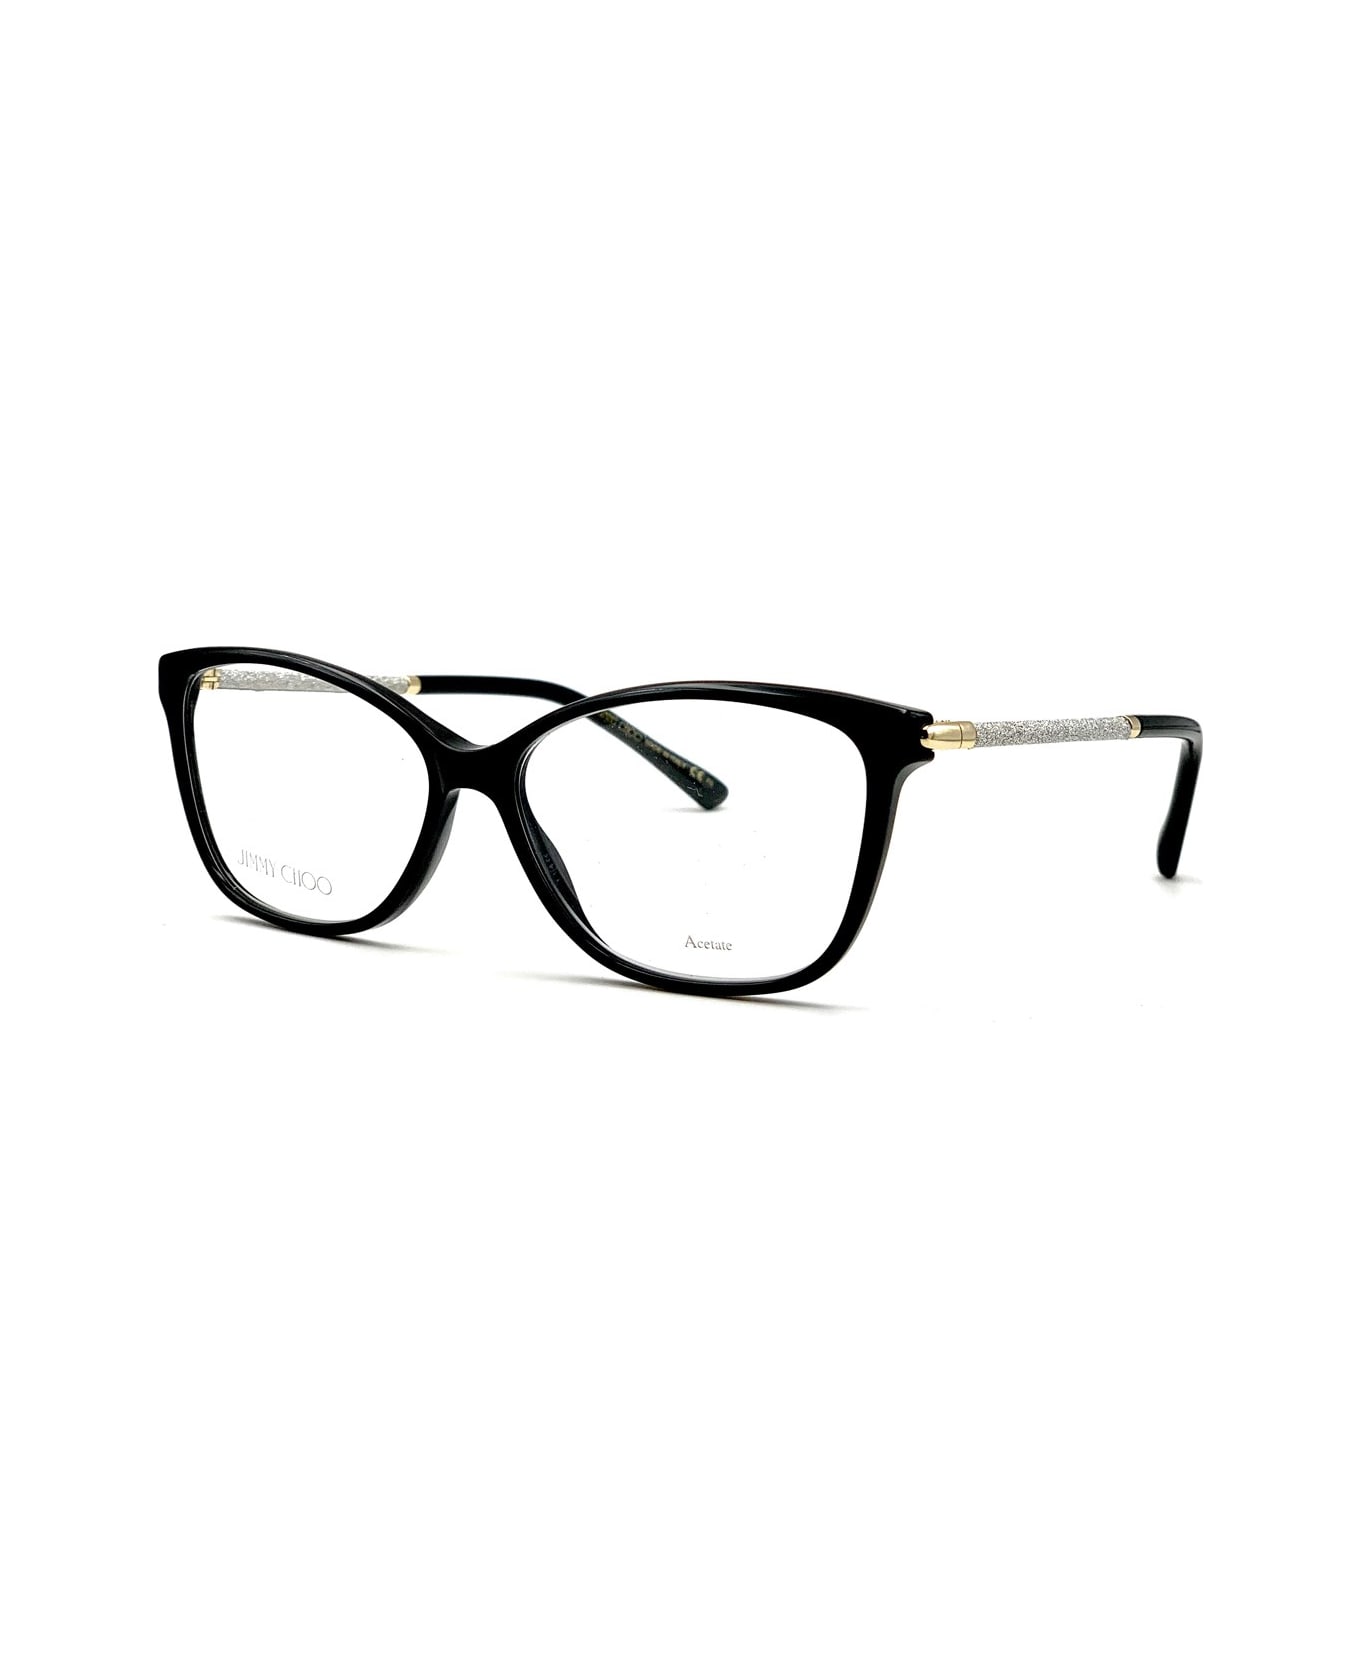 Jimmy Choo Eyewear Jc320 Glasses - Nero